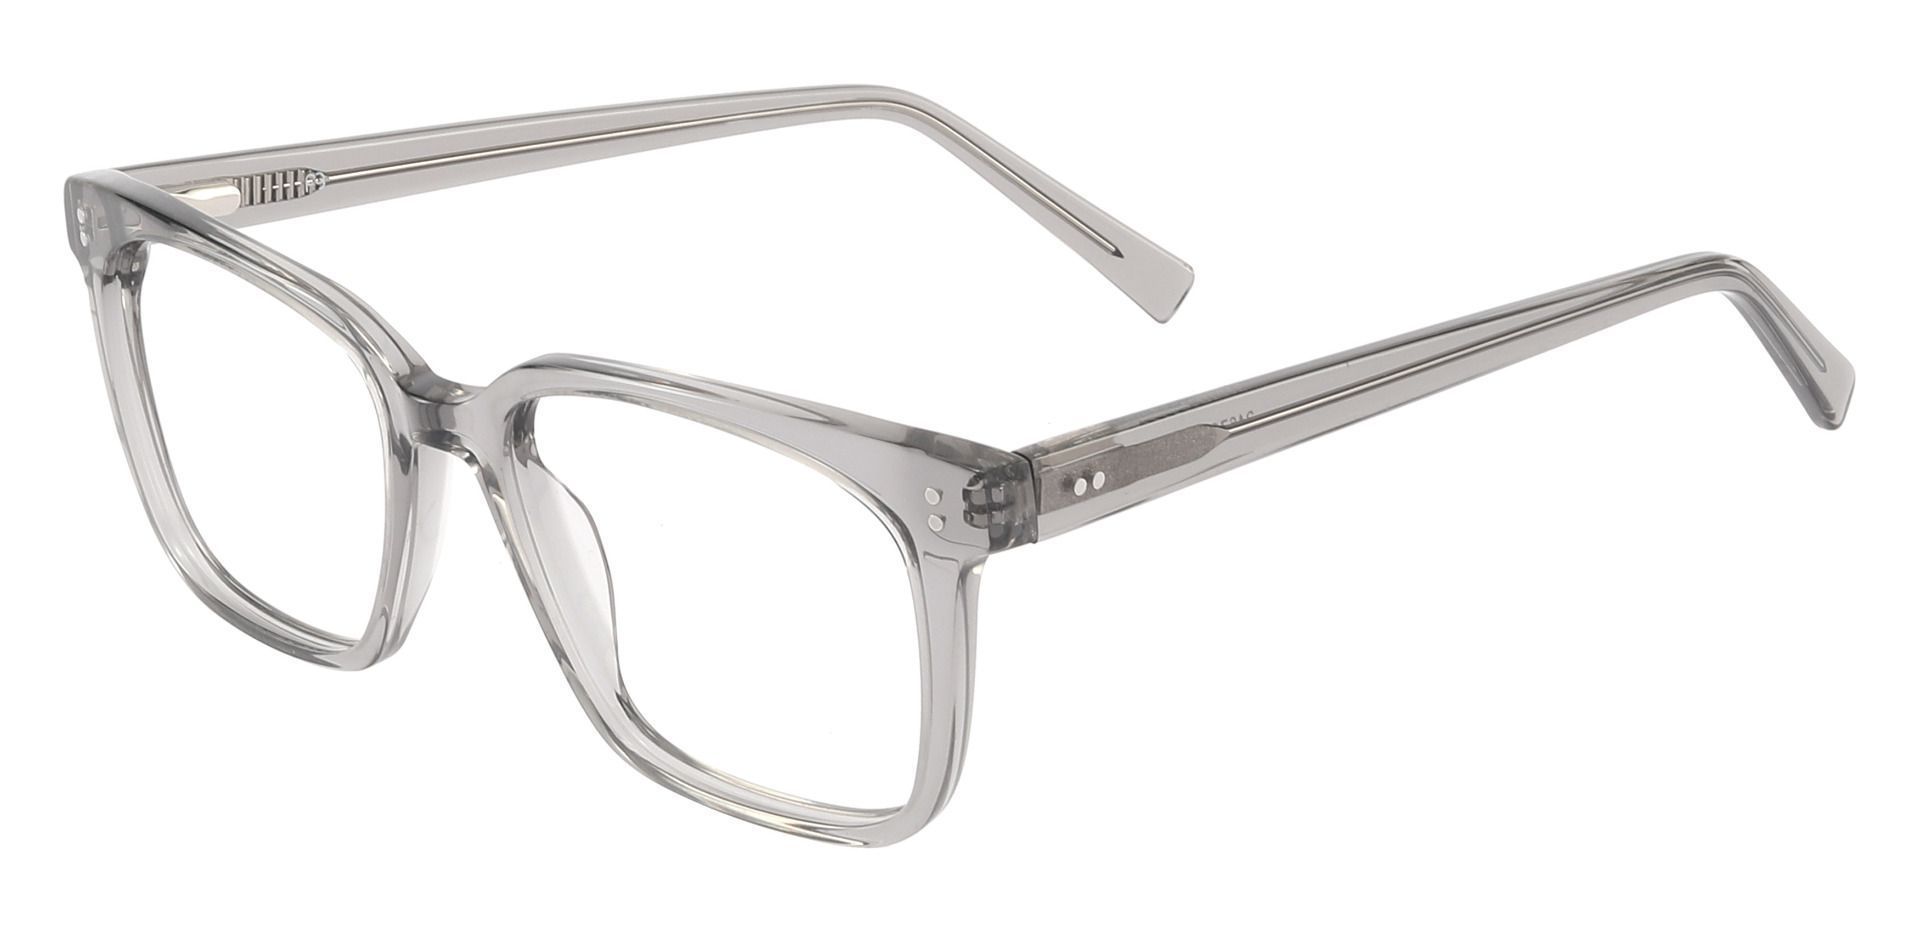 Apex Rectangle Reading Glasses - Gray